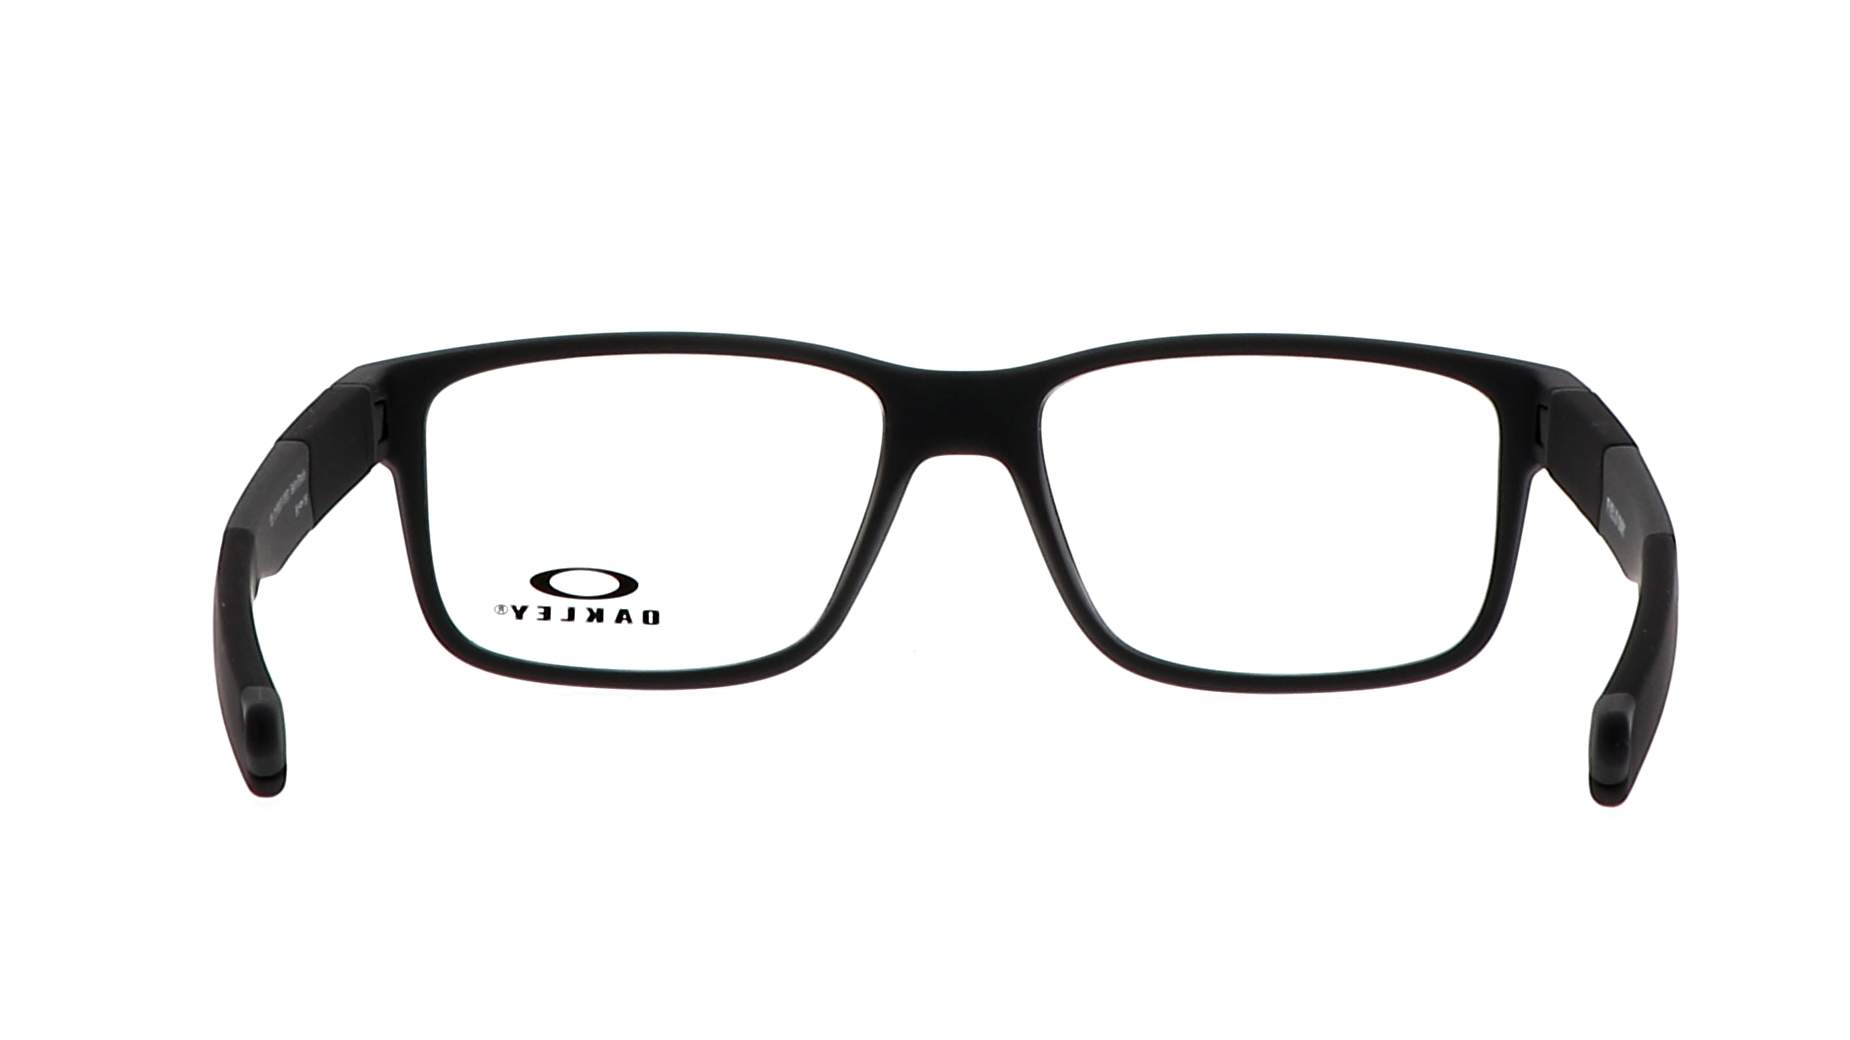 Eyeglasses Oakley Filed Day Black Matte OY8007 08 50-15 Junior in stock ...